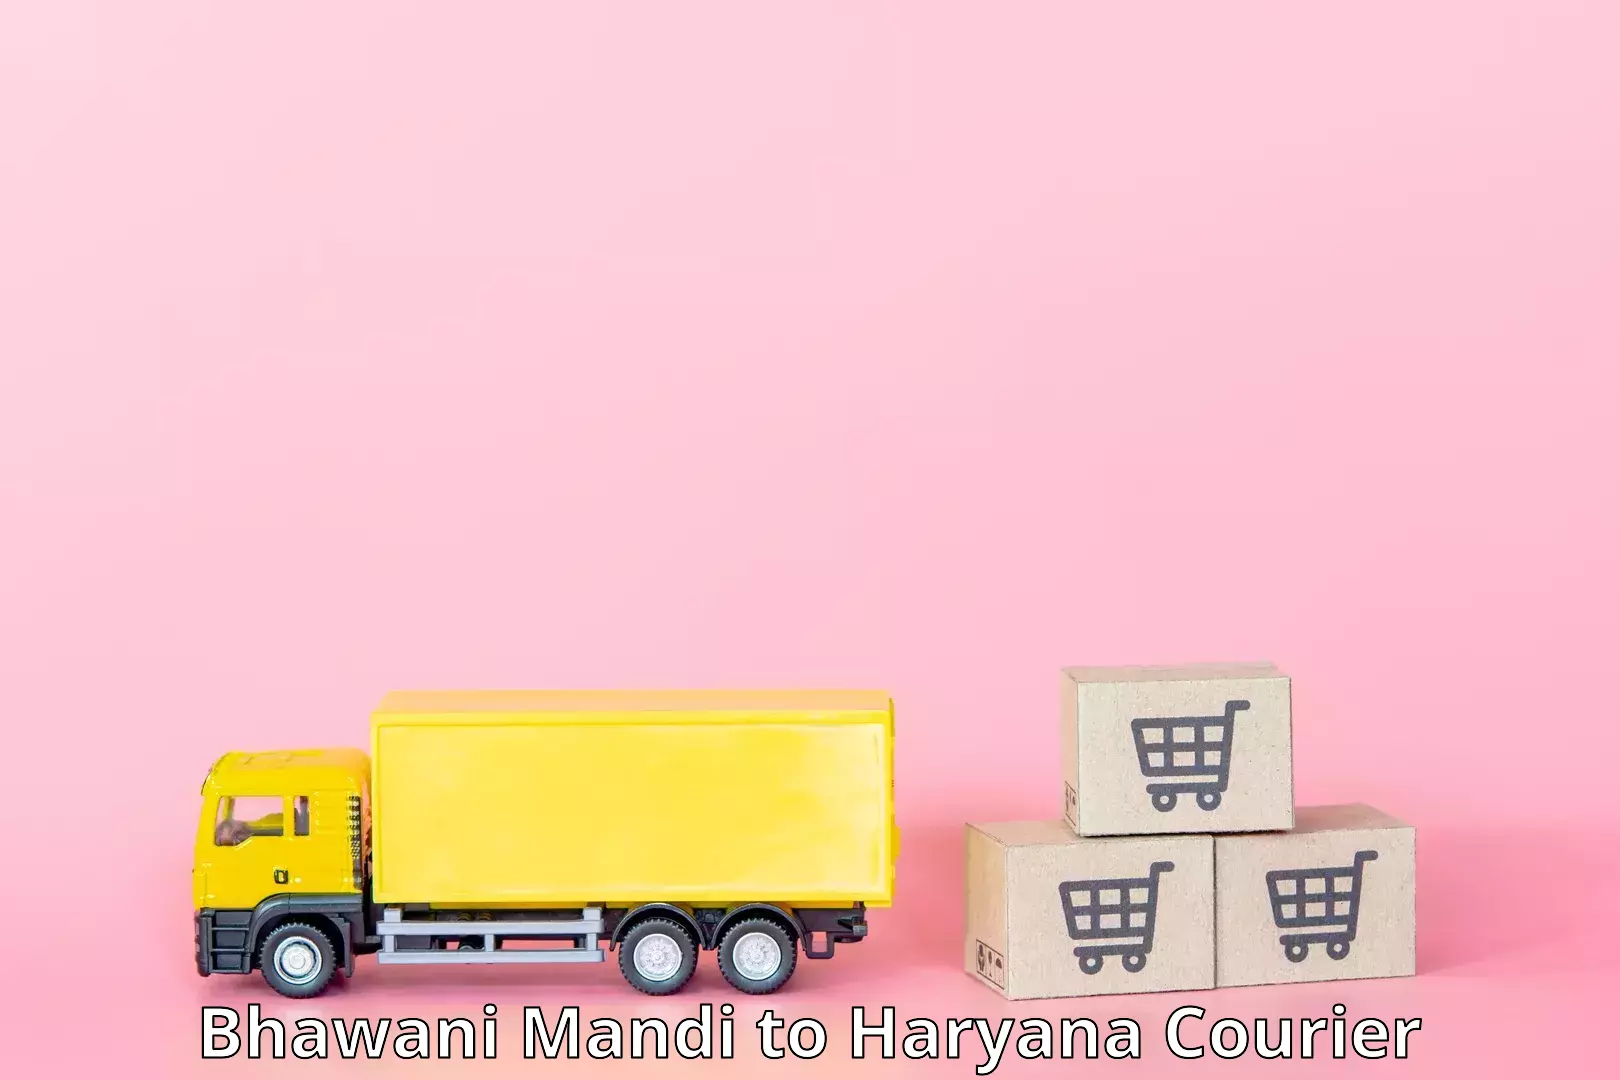 Automated shipping processes Bhawani Mandi to NCR Haryana